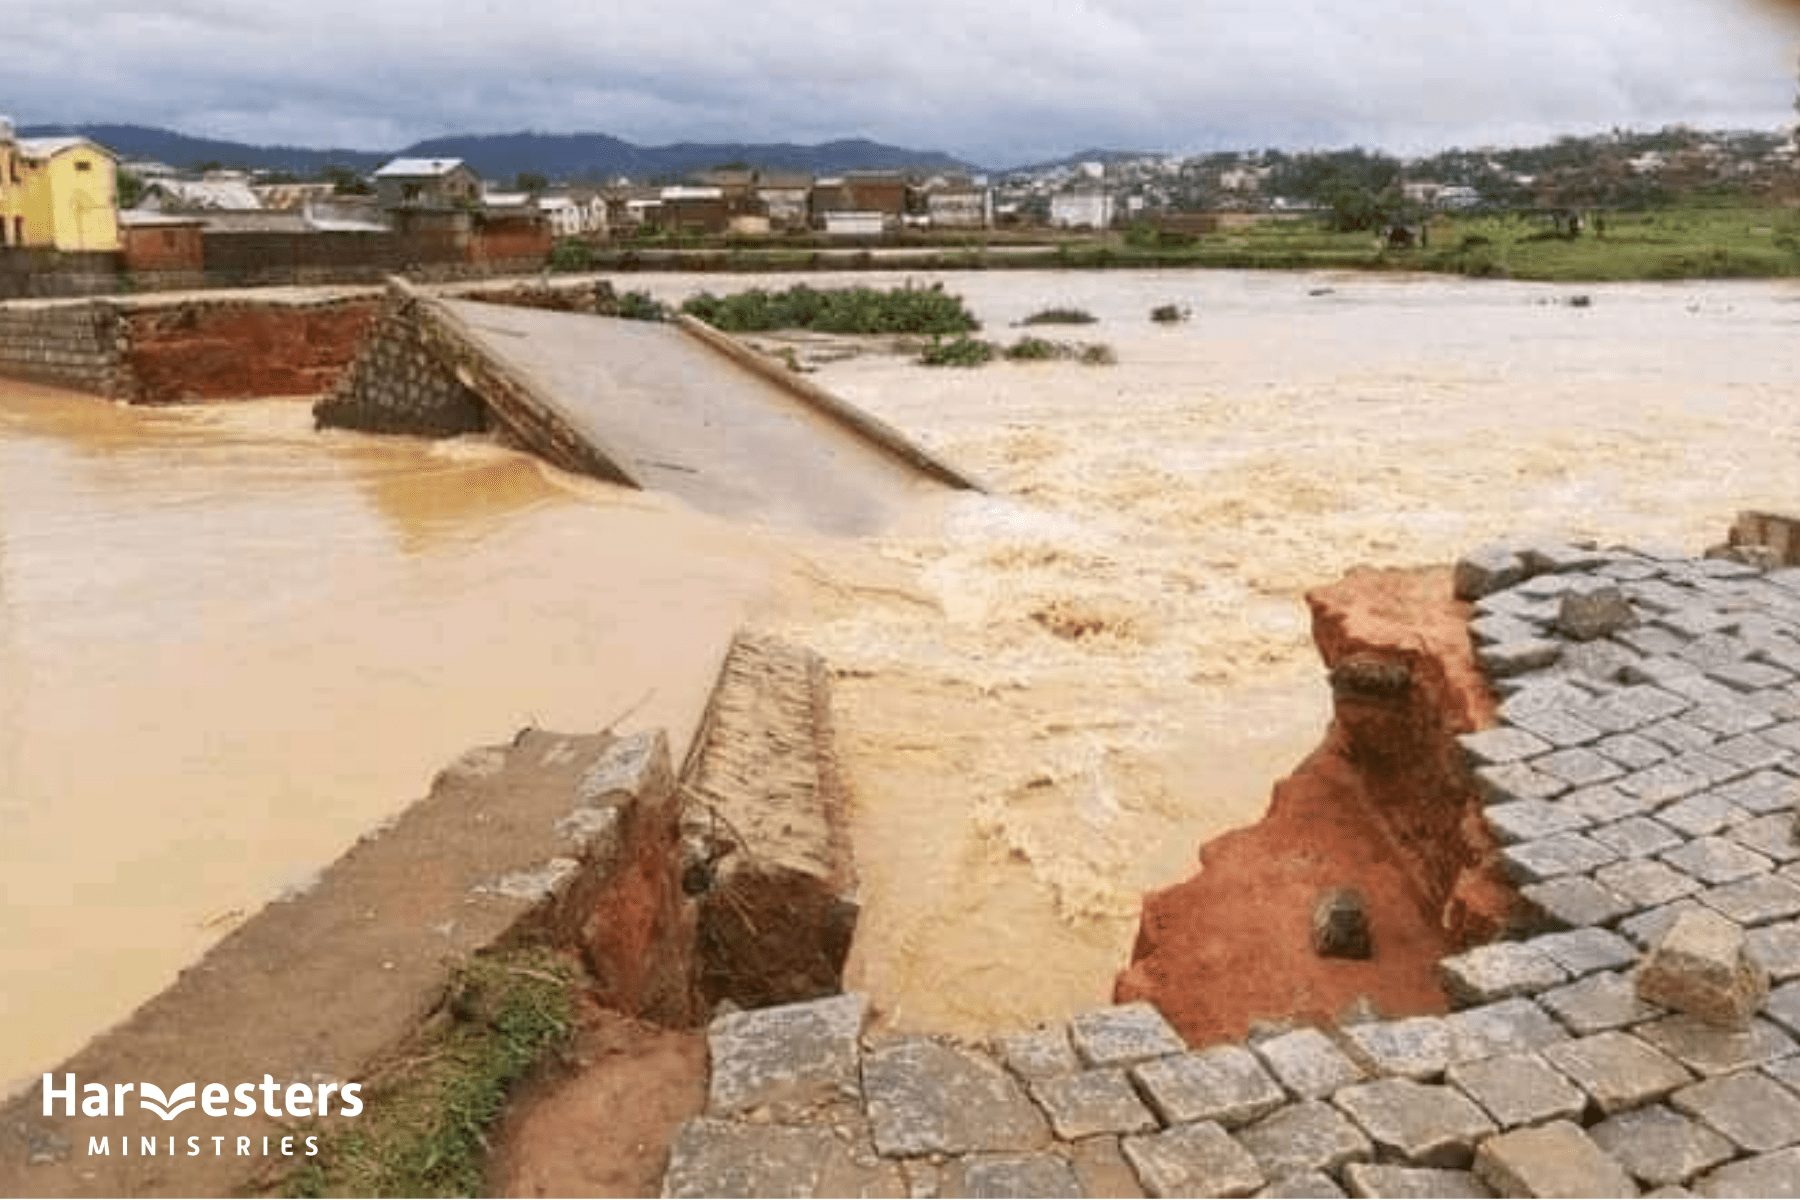 Madagascar bridge destroyed. Harvesters Ministries